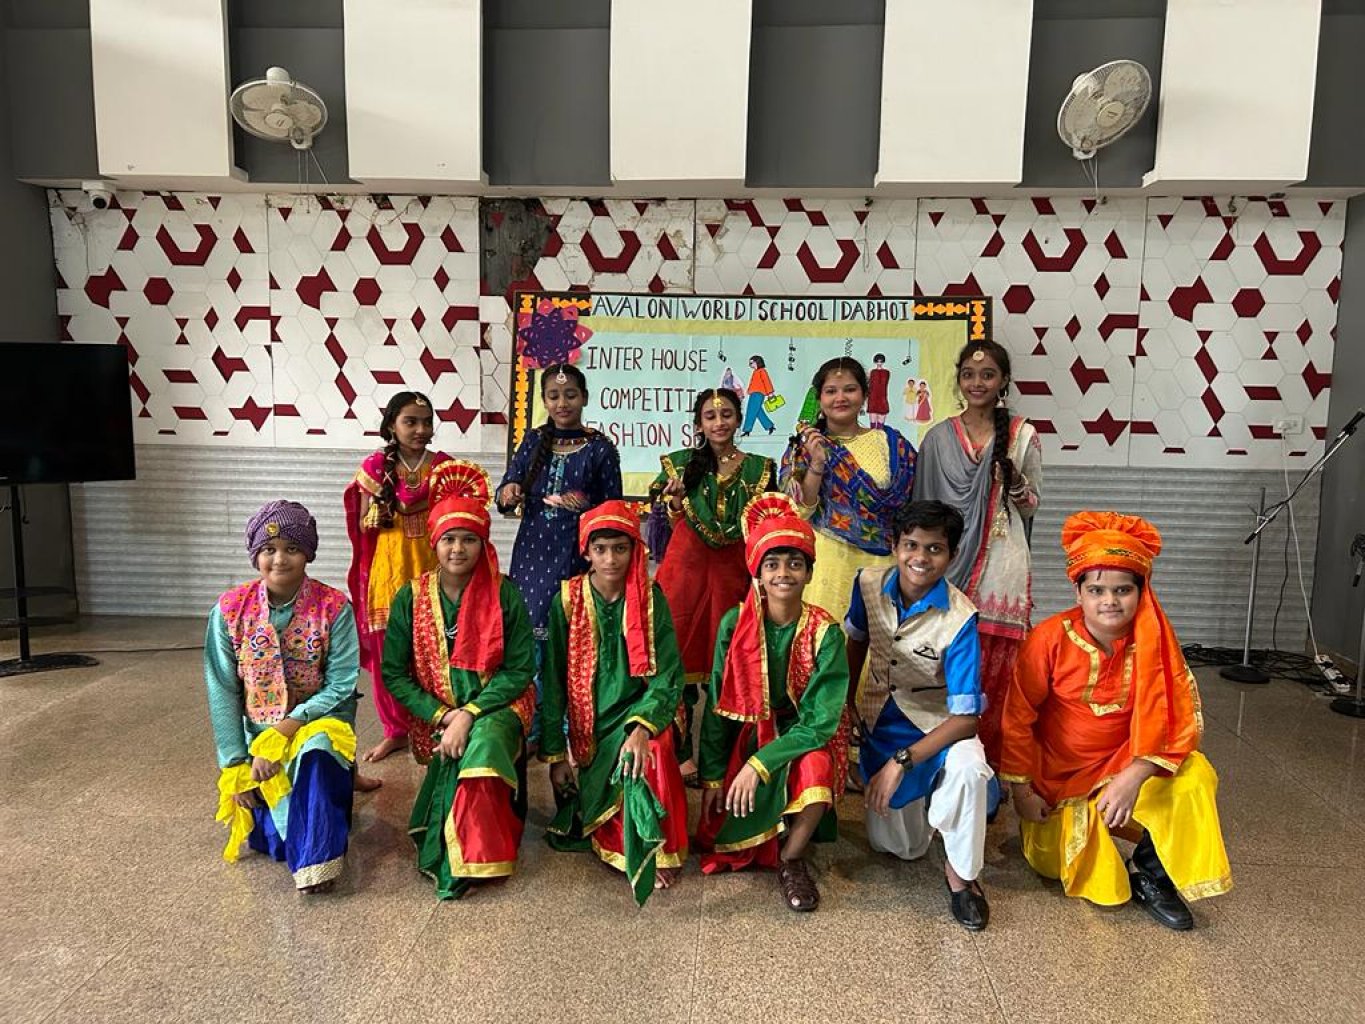 Ek Bharat Shreshtha Bharat.... The students of Avalon World School Dabhoi showcased the spirit of national integration and feelings of brotherhood